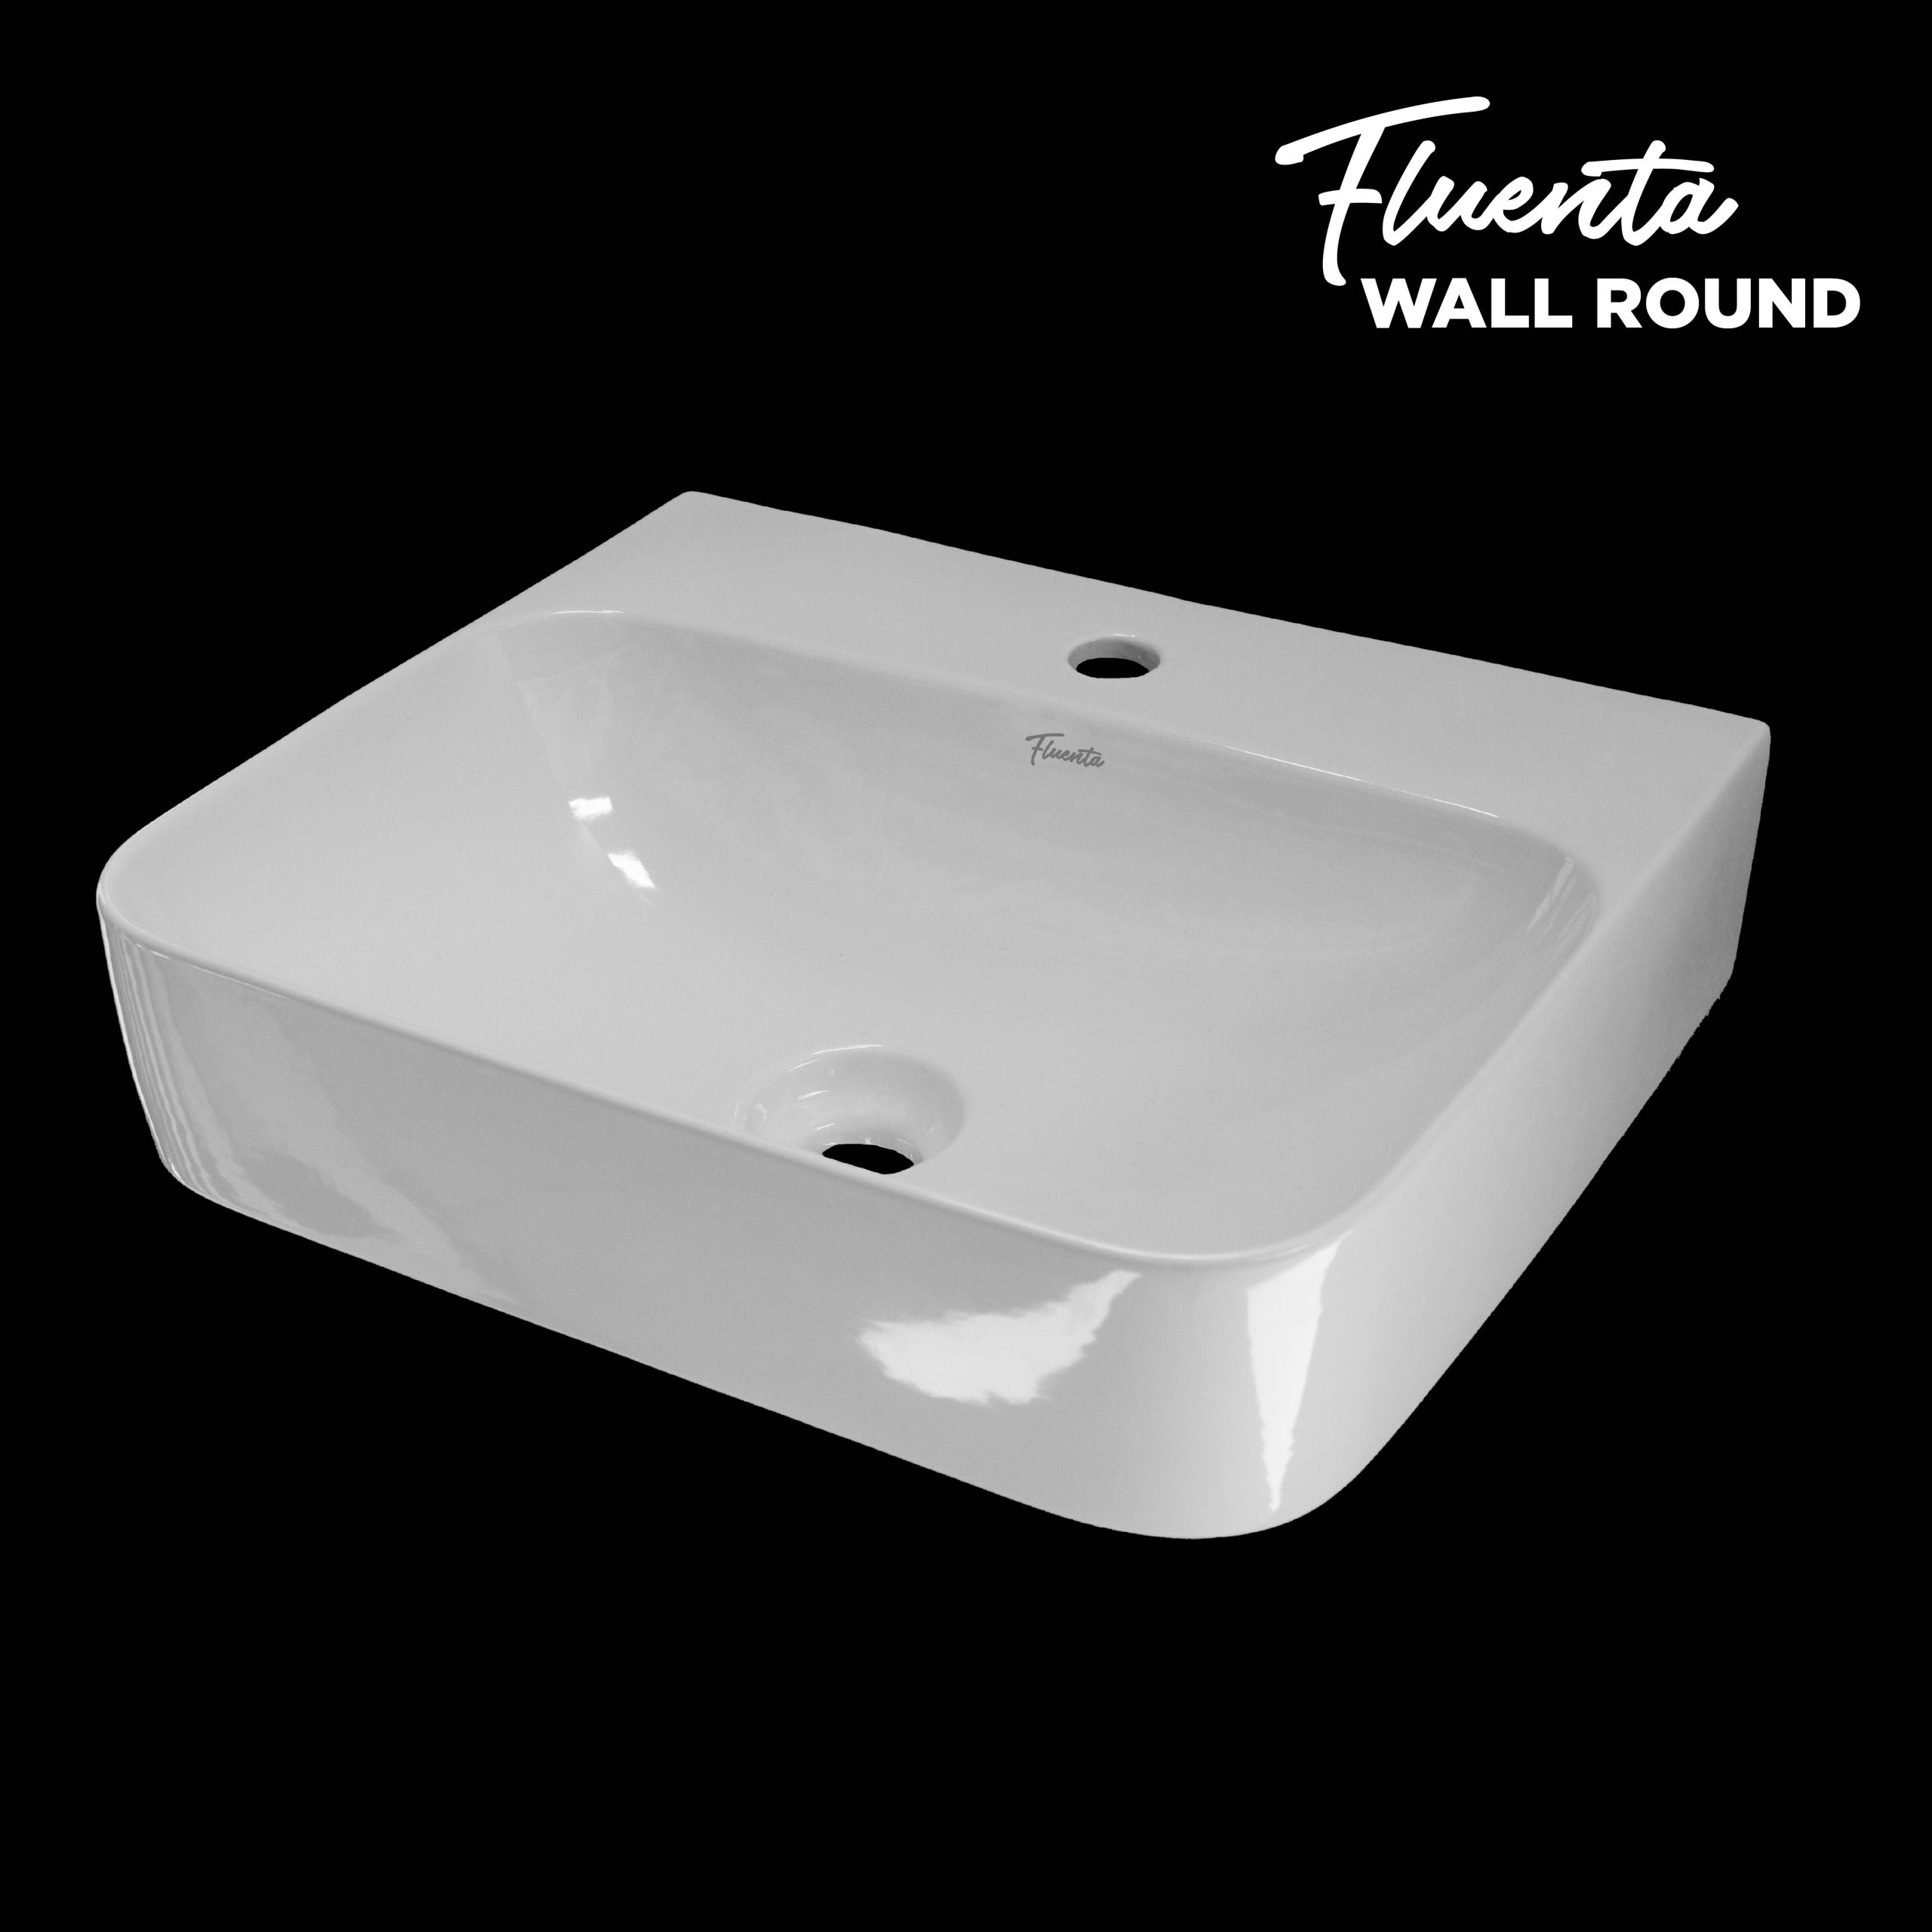 Fluenta lavabo Wall Round